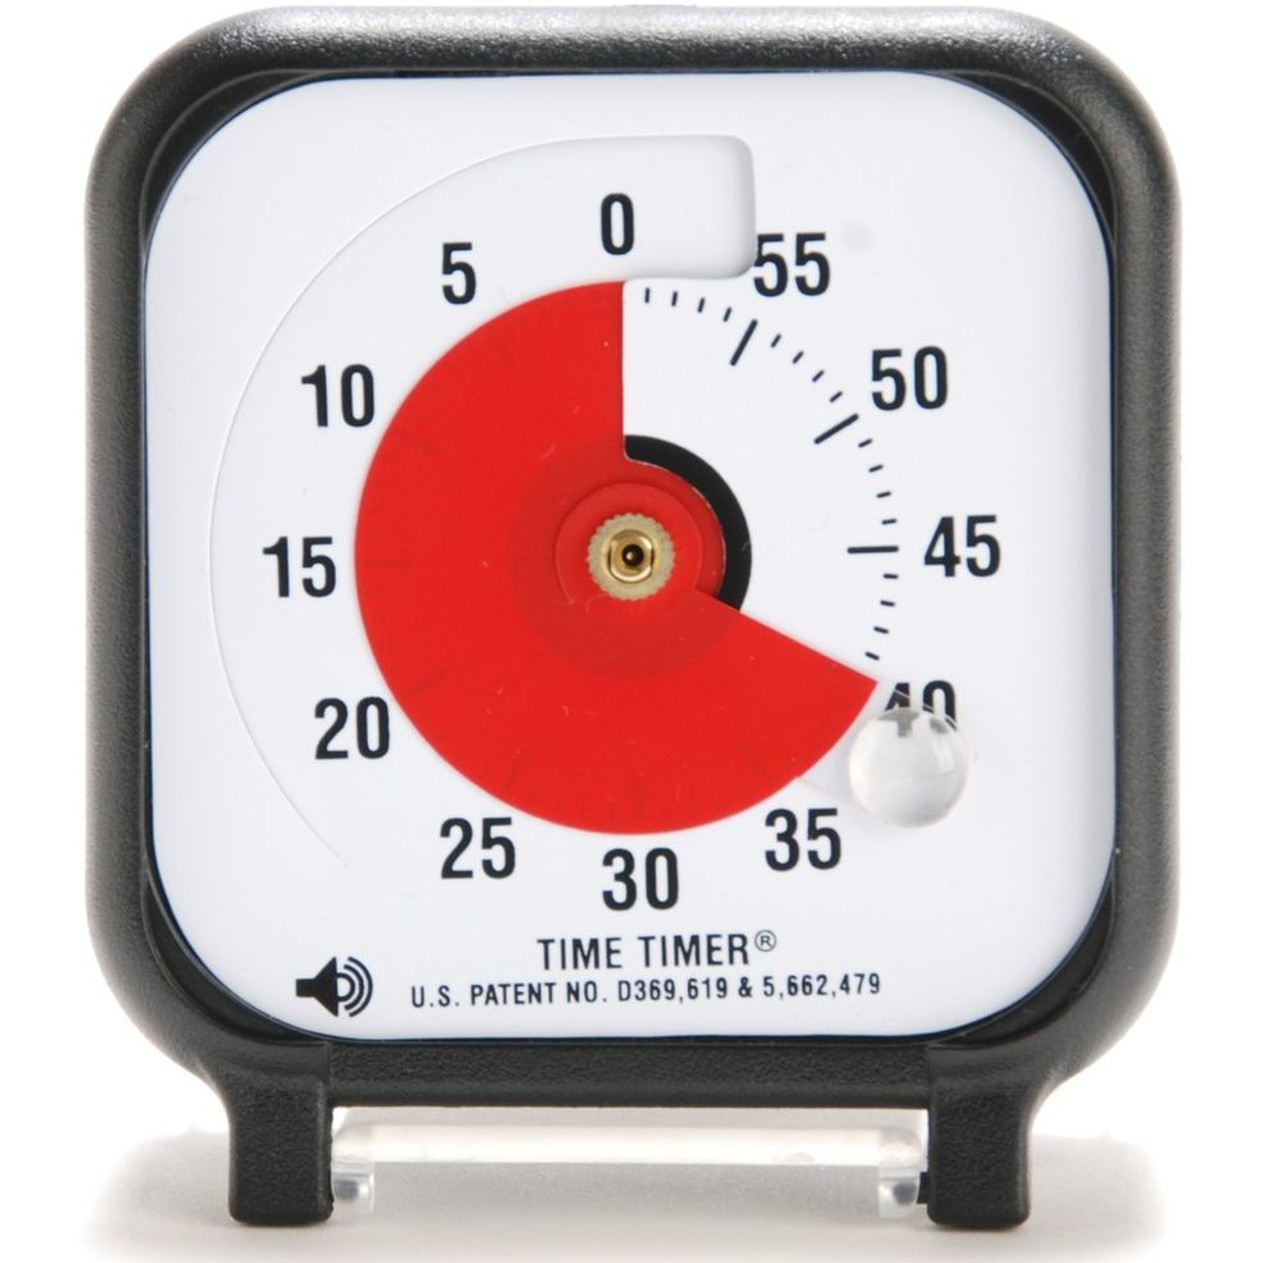 Time Timer-3 inch - Sensory University, Inc.